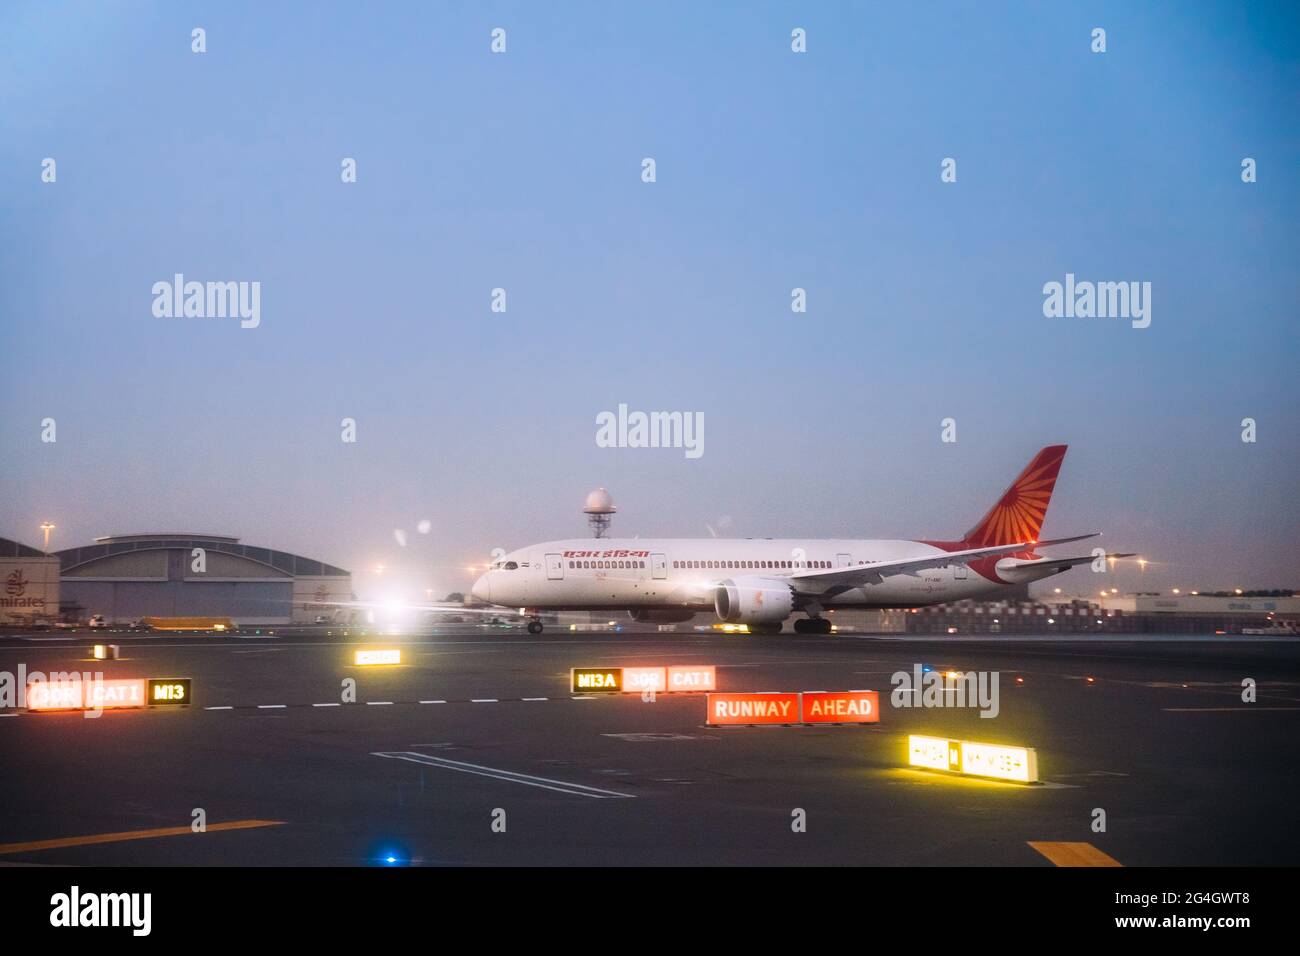 Airline Air India Plane Stand At Dubai Airport. Dubai, United Arab Emirates Stock Photo